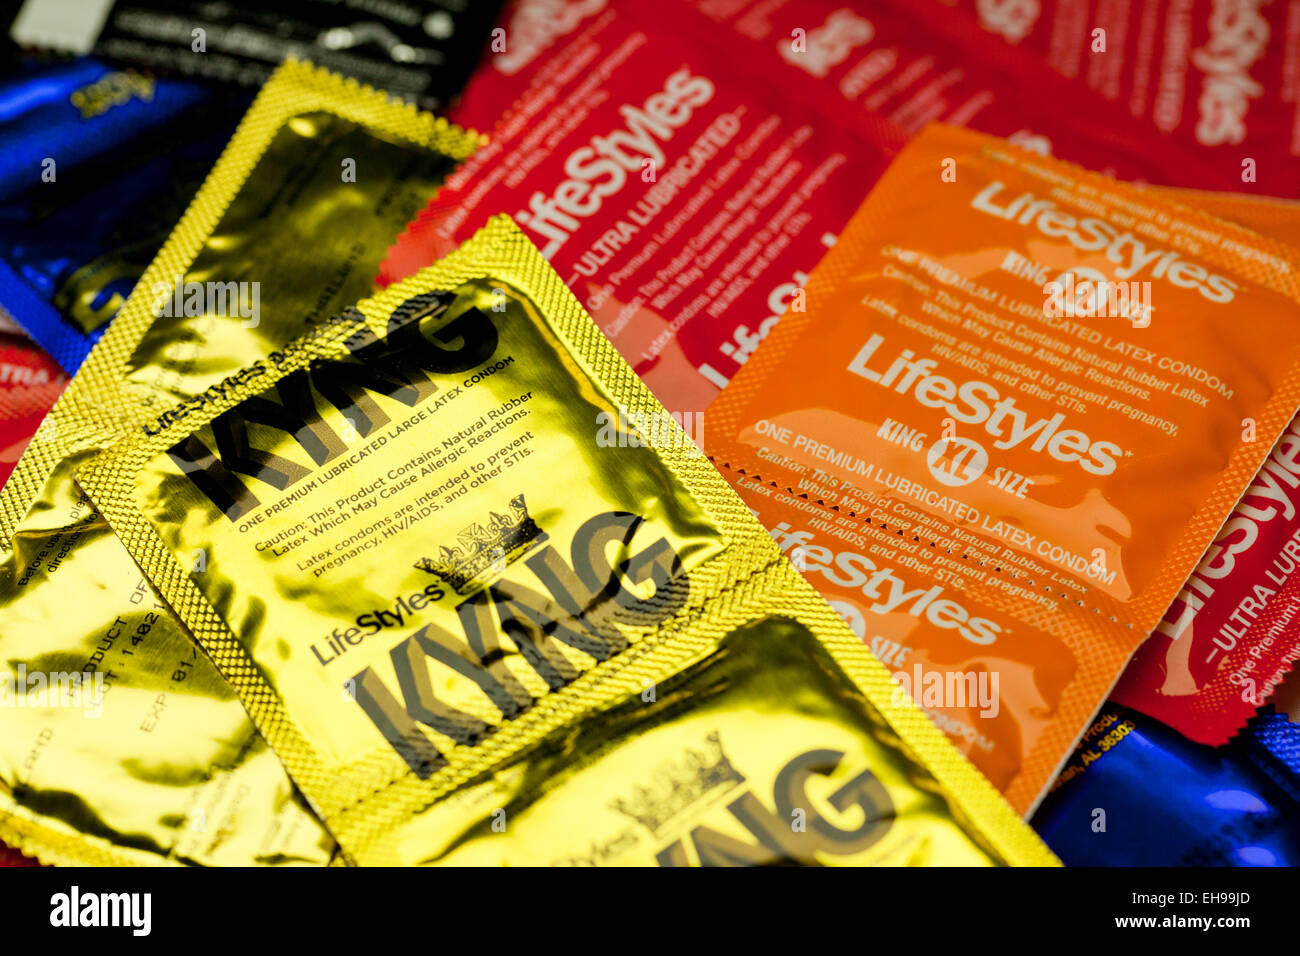 Varie marche di preservativi - USA Foto Stock